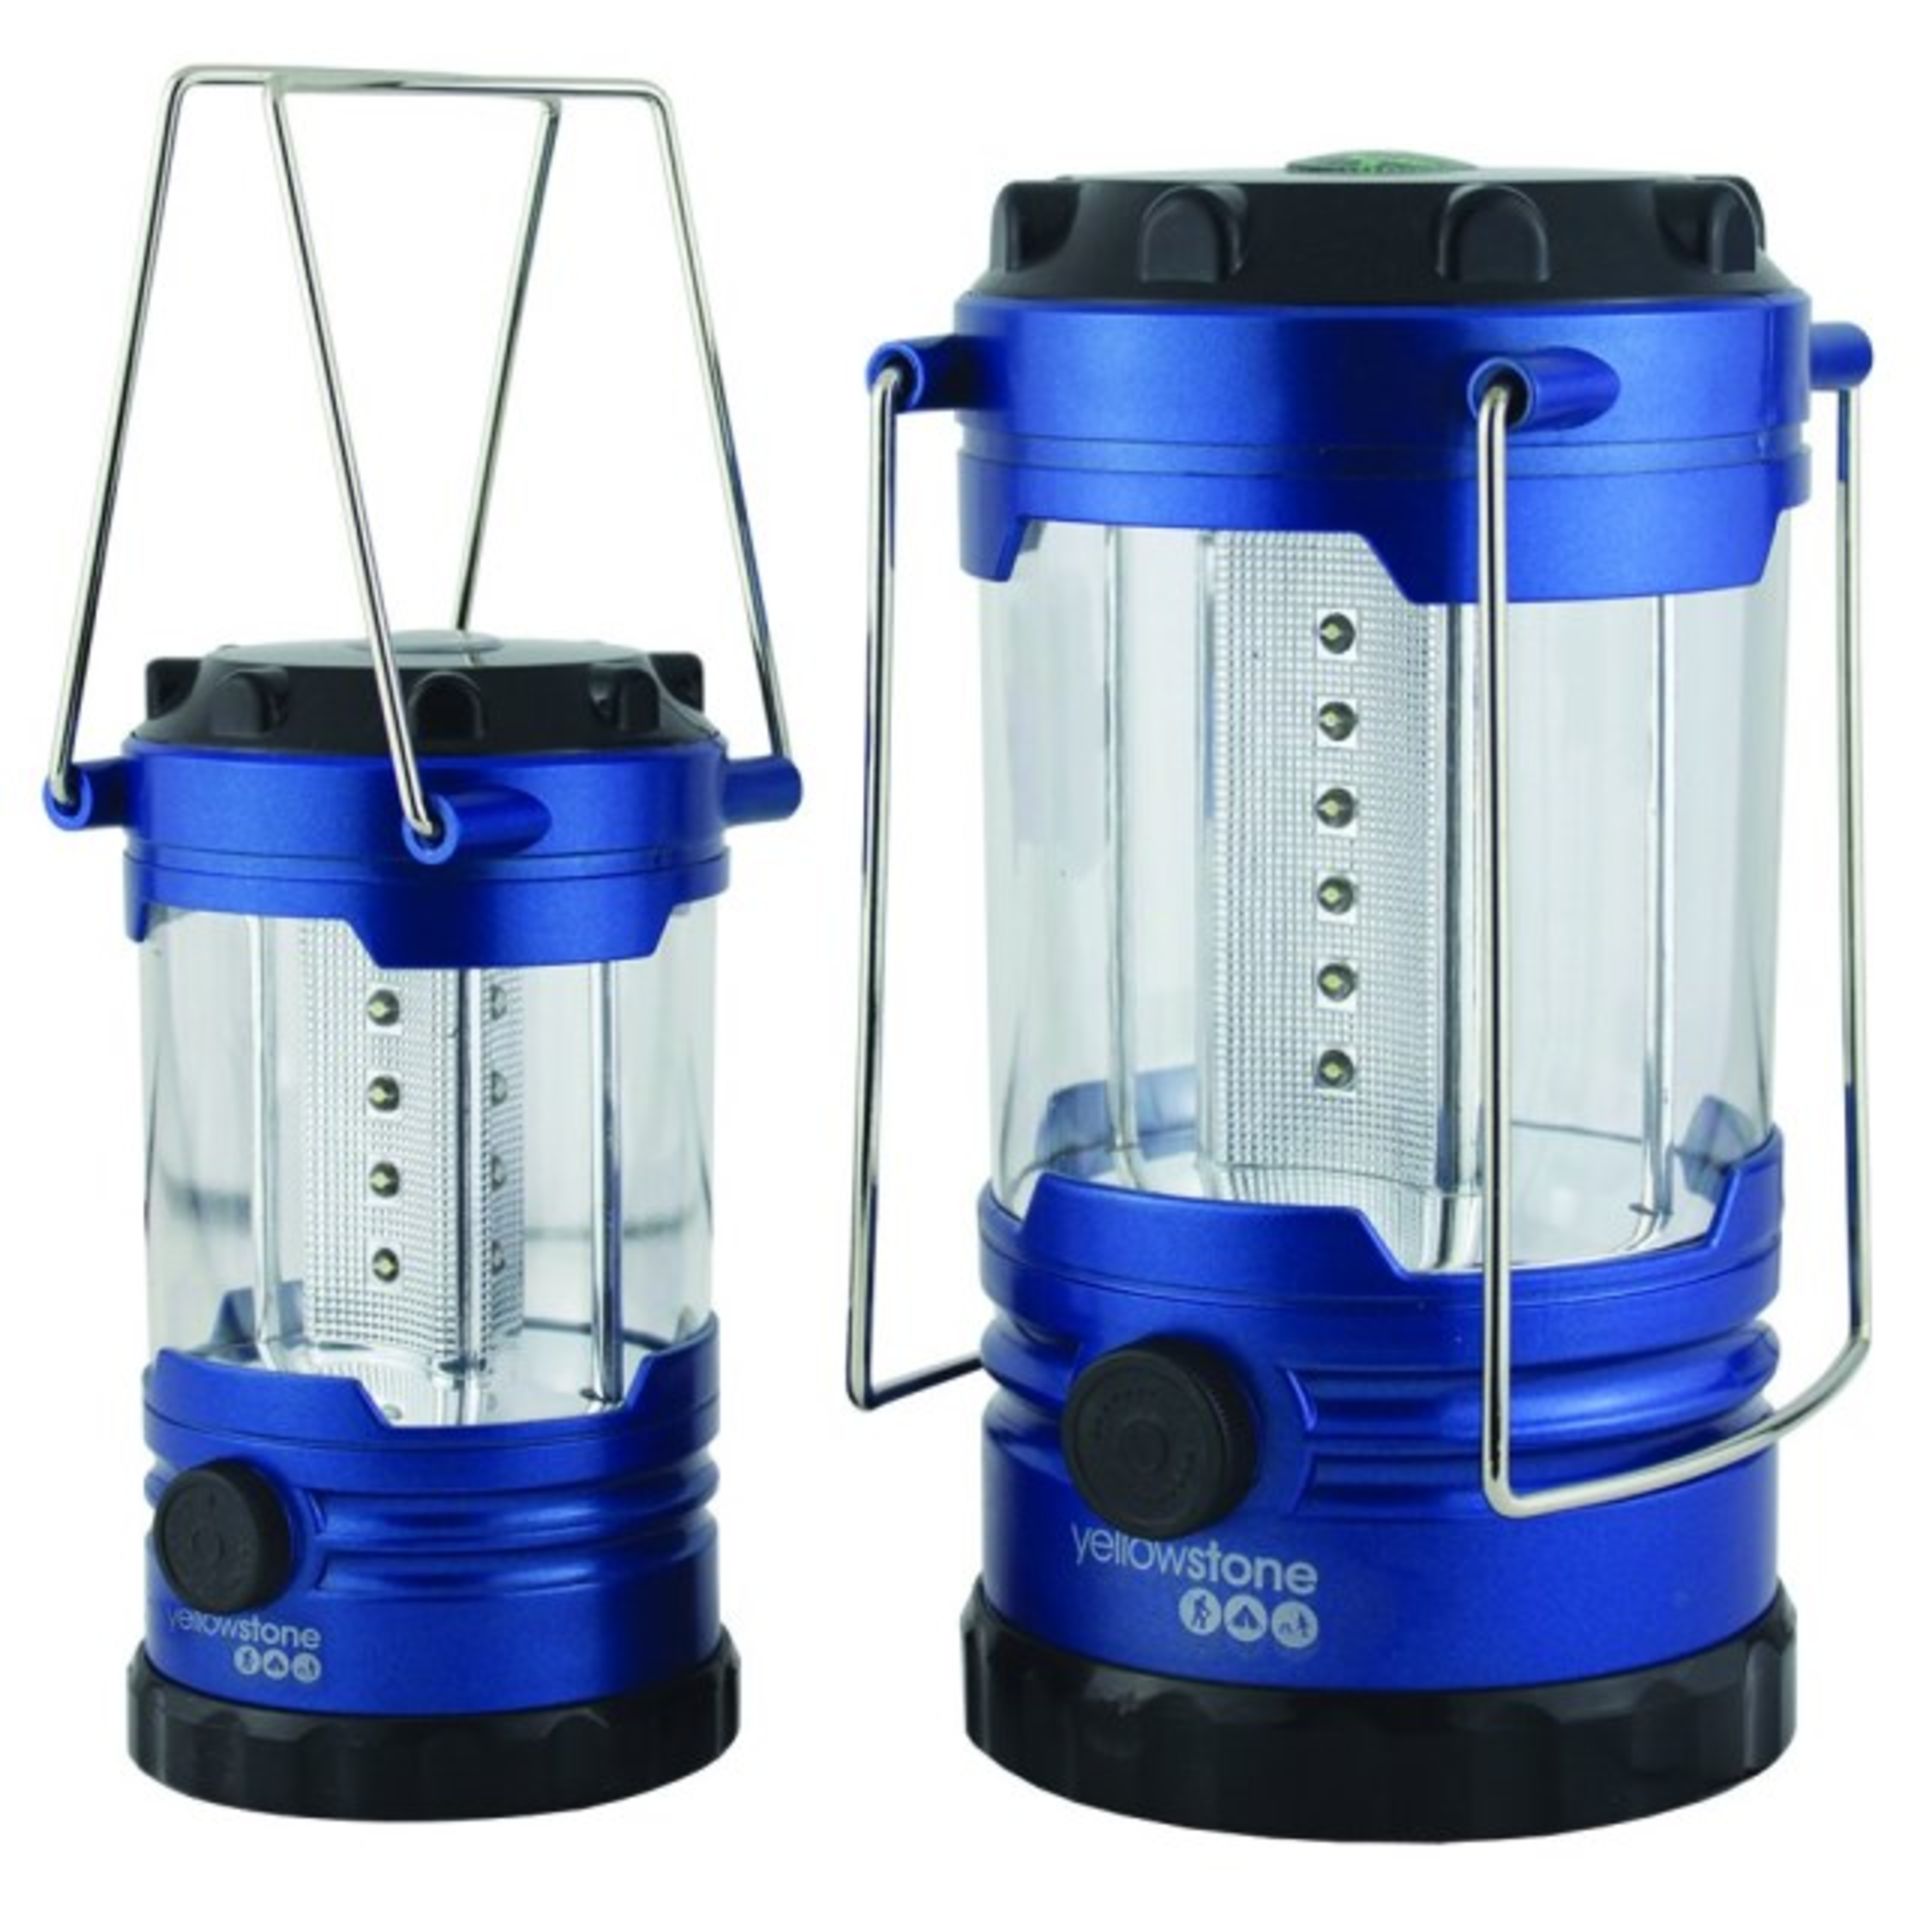 V LED Two Lantern Set - Ultra Bright - 18 Hour Burn Time RRP £29.99